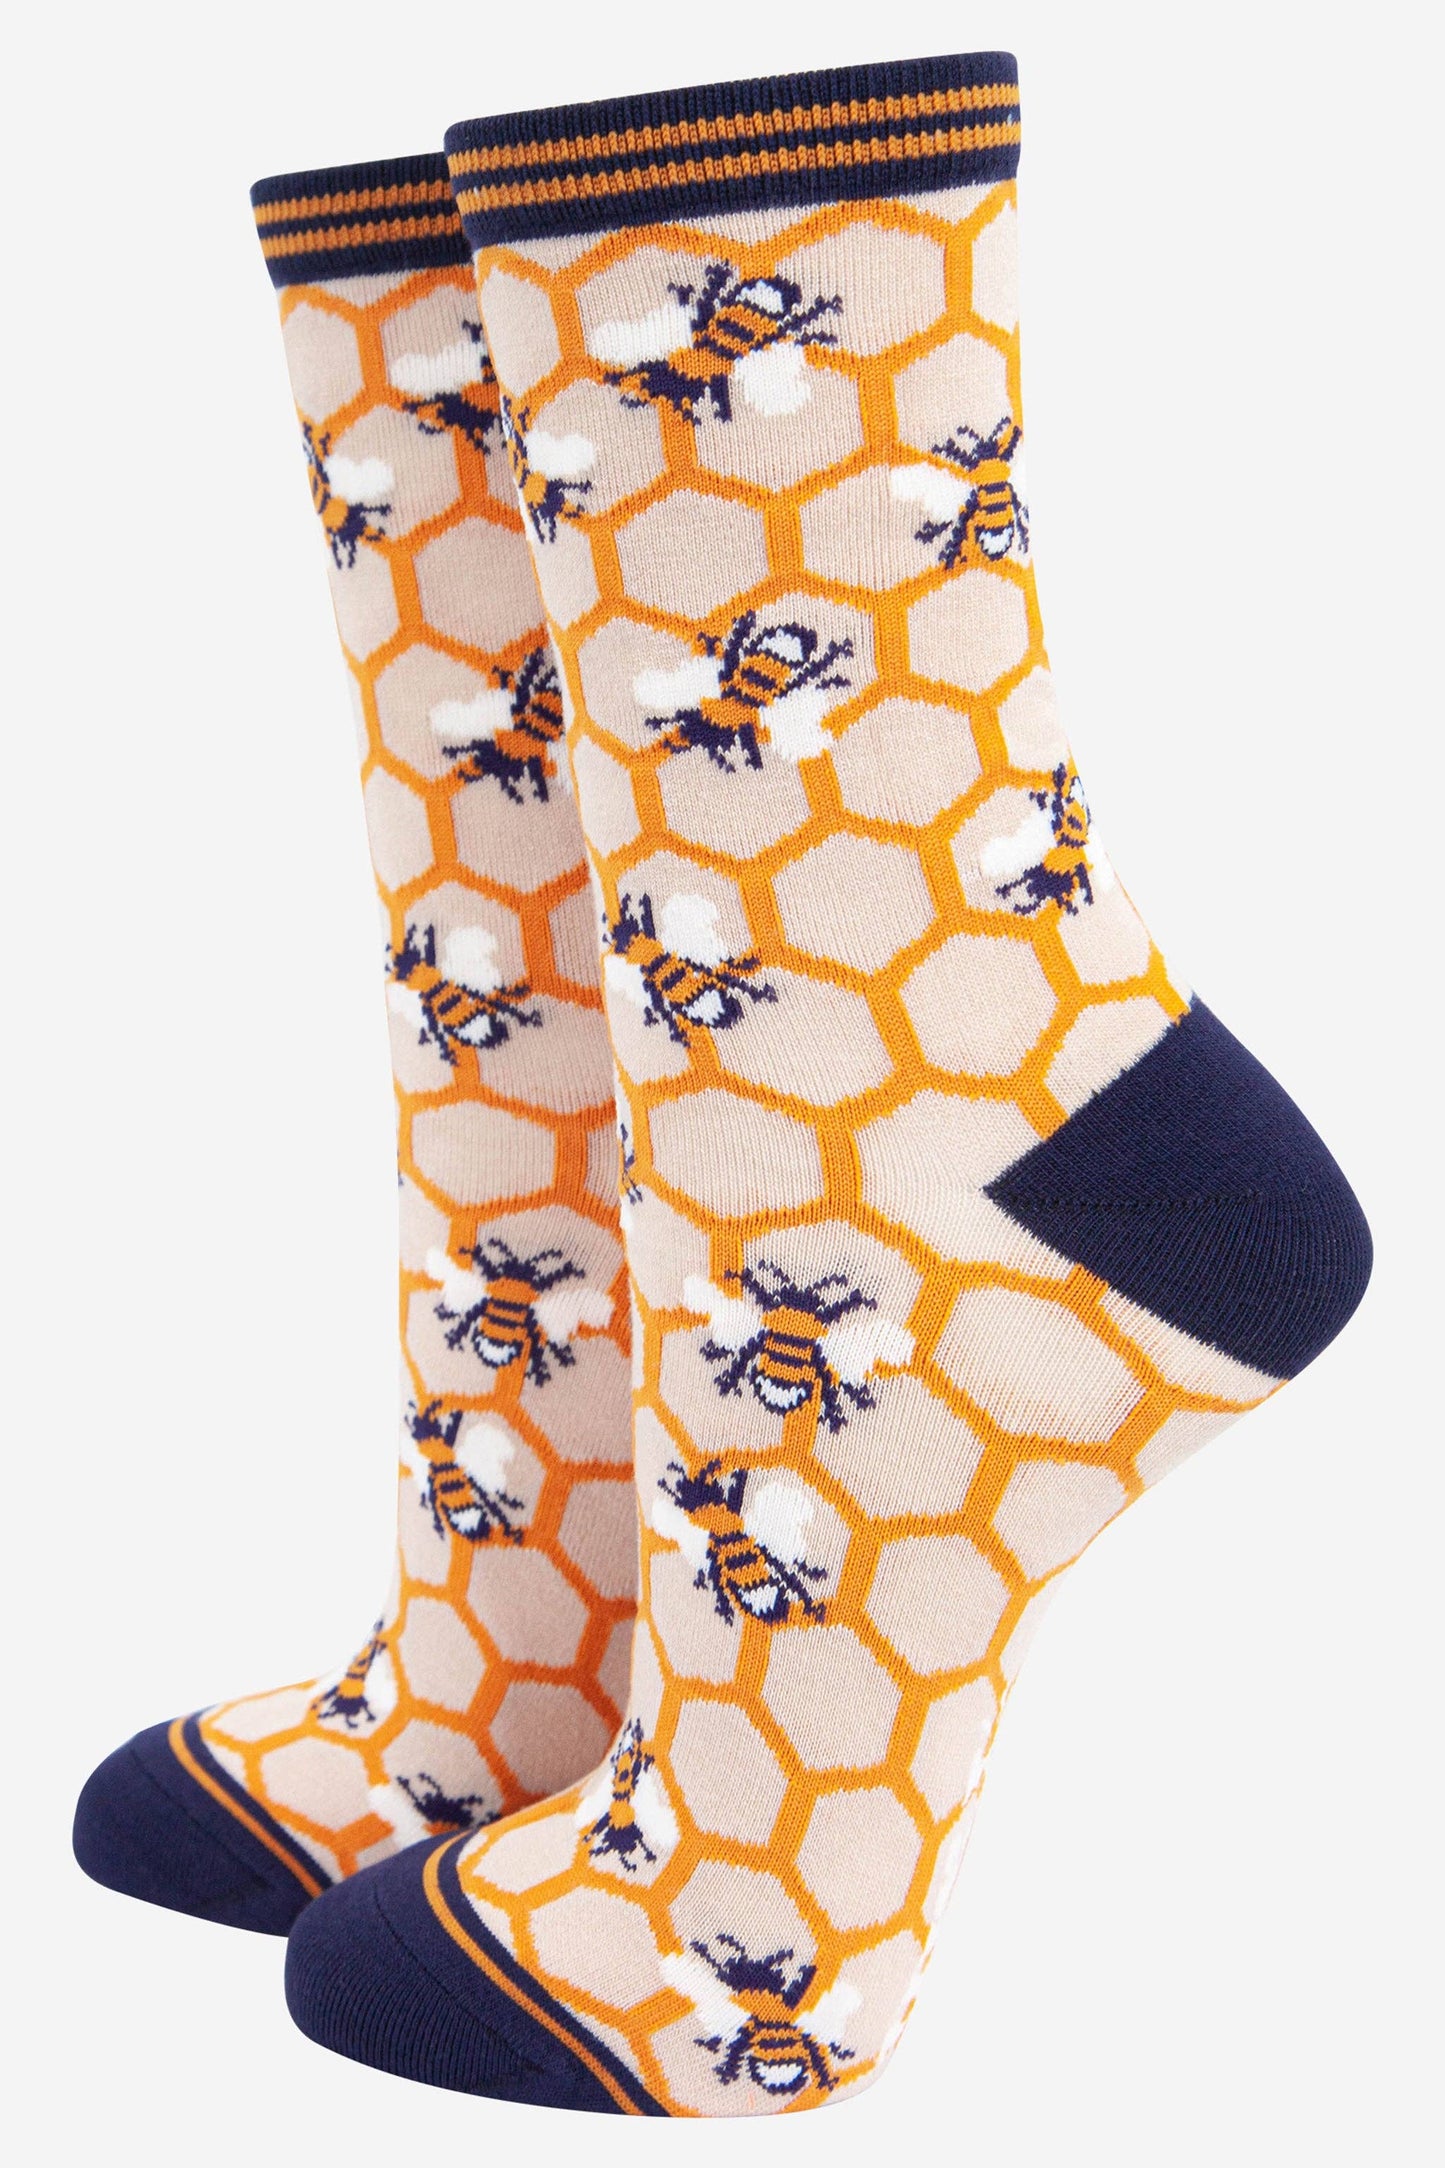 Sock Talk - Women's Honeycomb and Bee Bamboo Socks